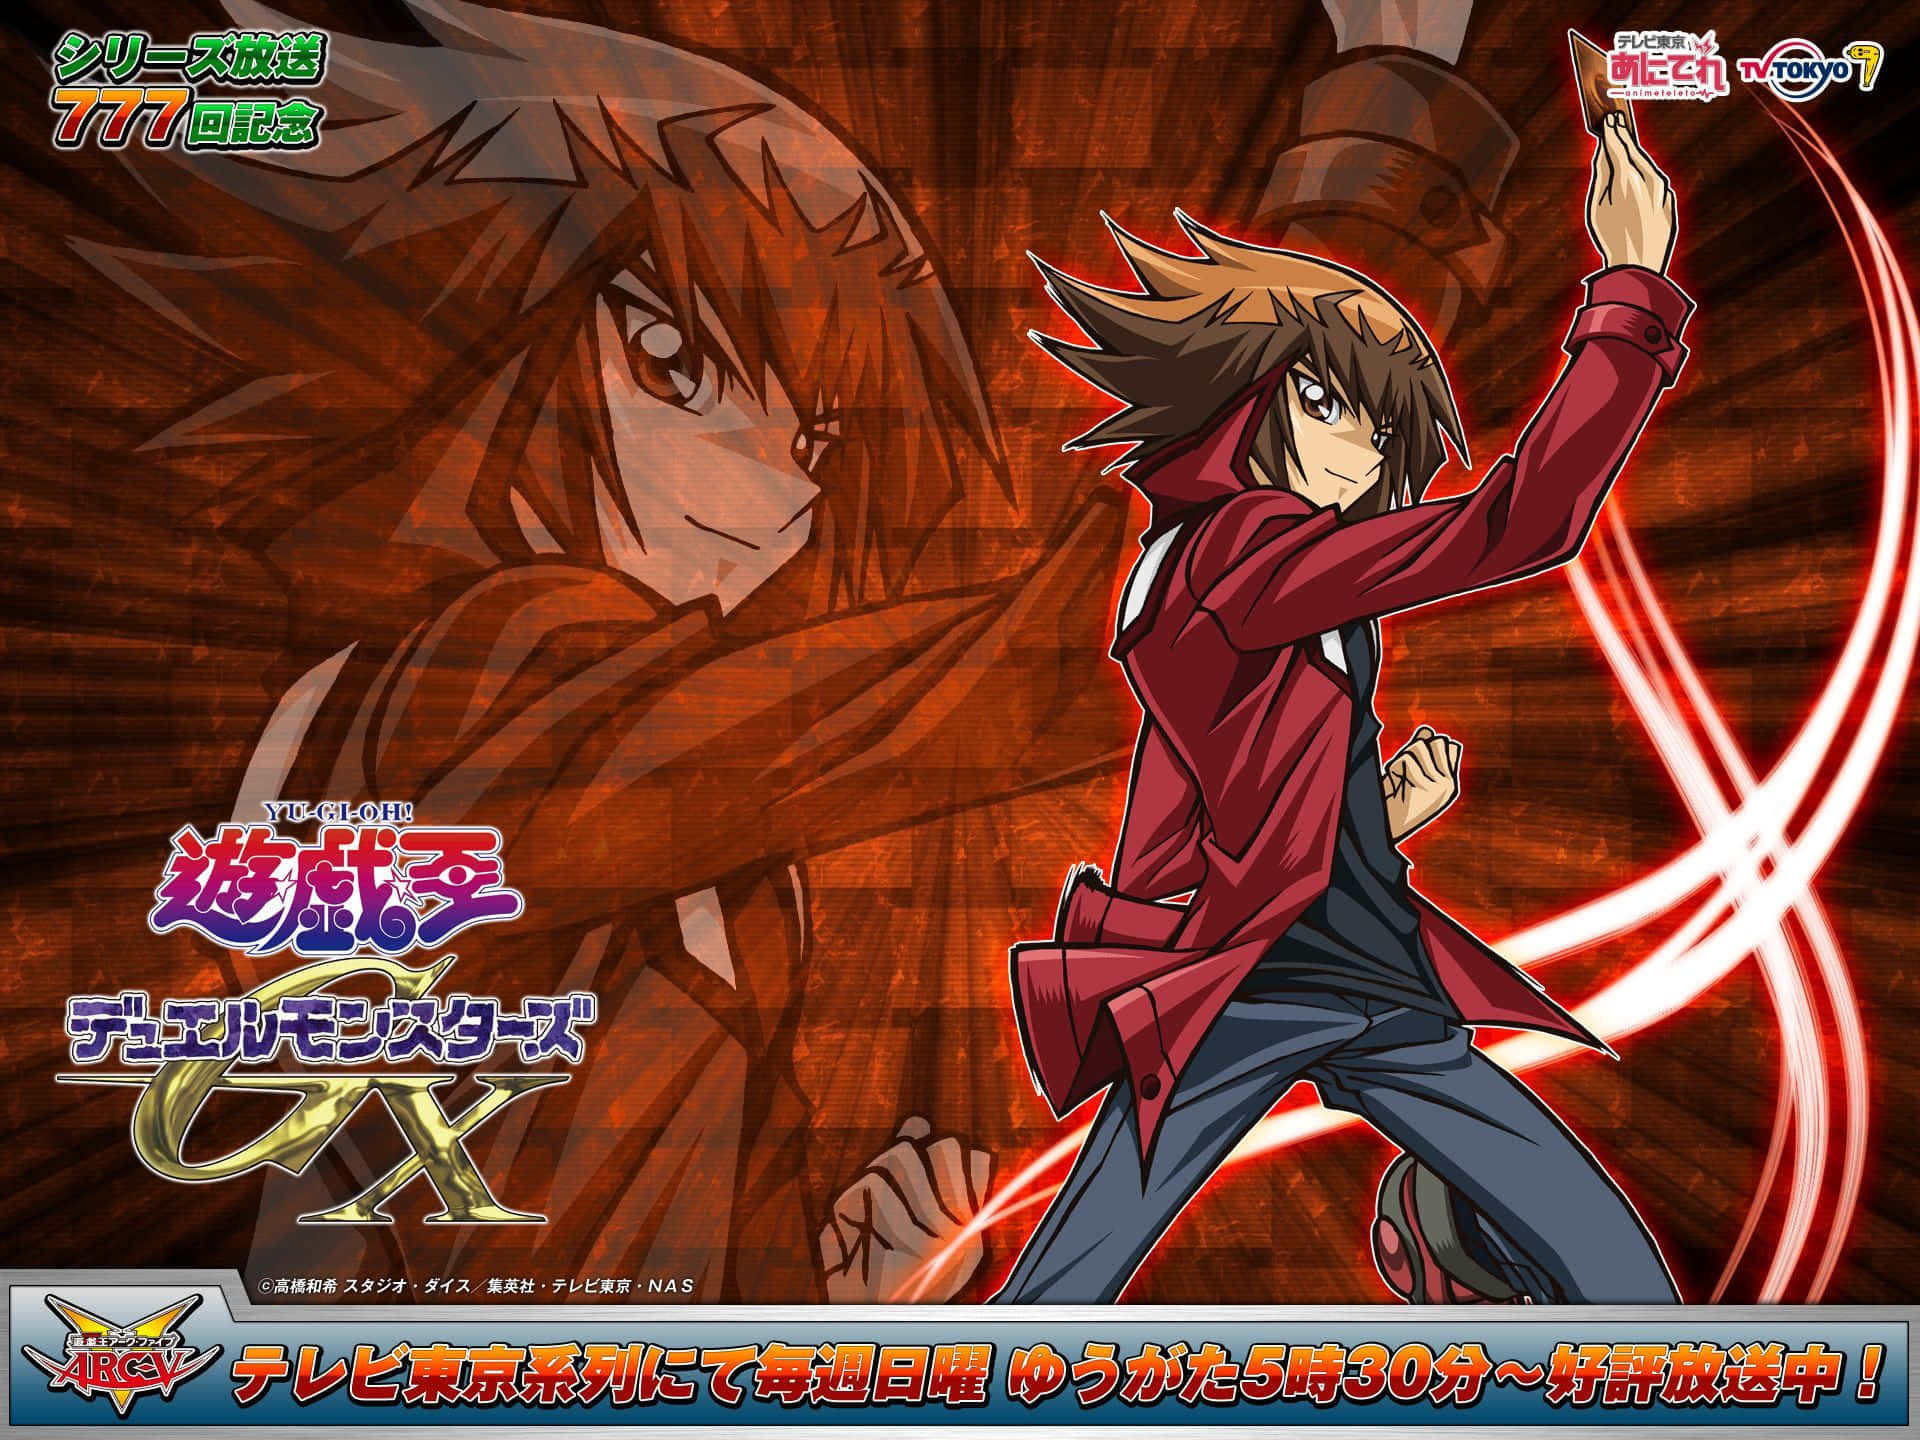 Jaden Yuki posing with his elemental heroes in an intense duel scene Wallpaper